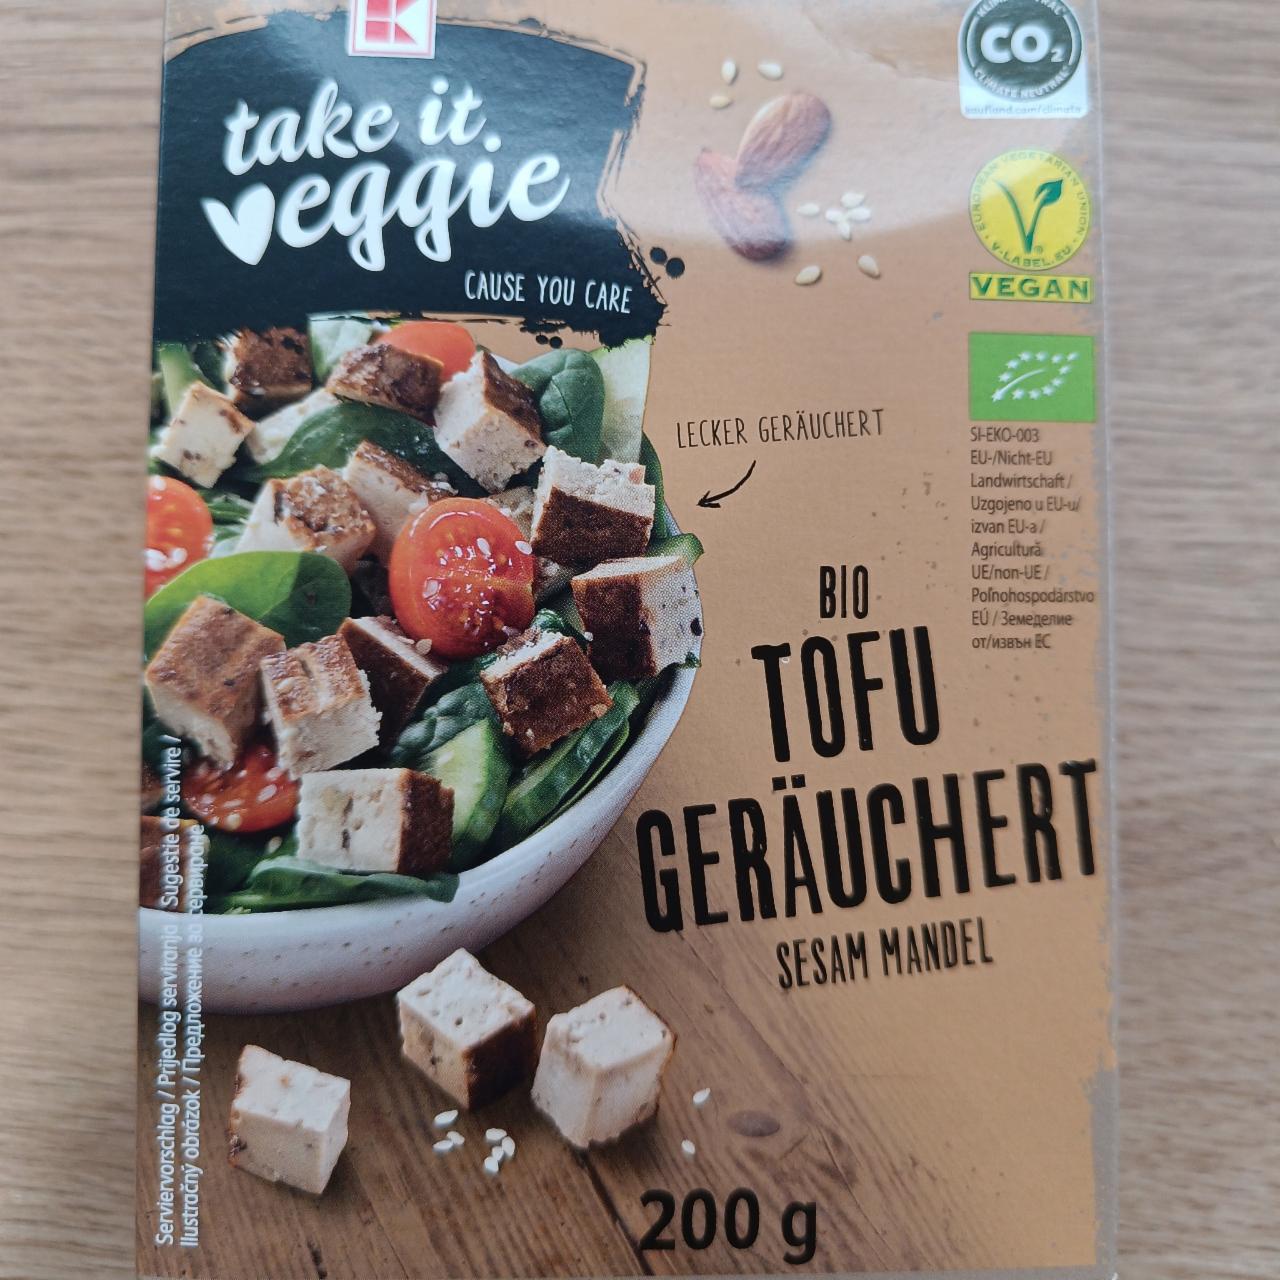 Fotografie - Bio Tofu geräuchert sesam mandel K-Take it veggie